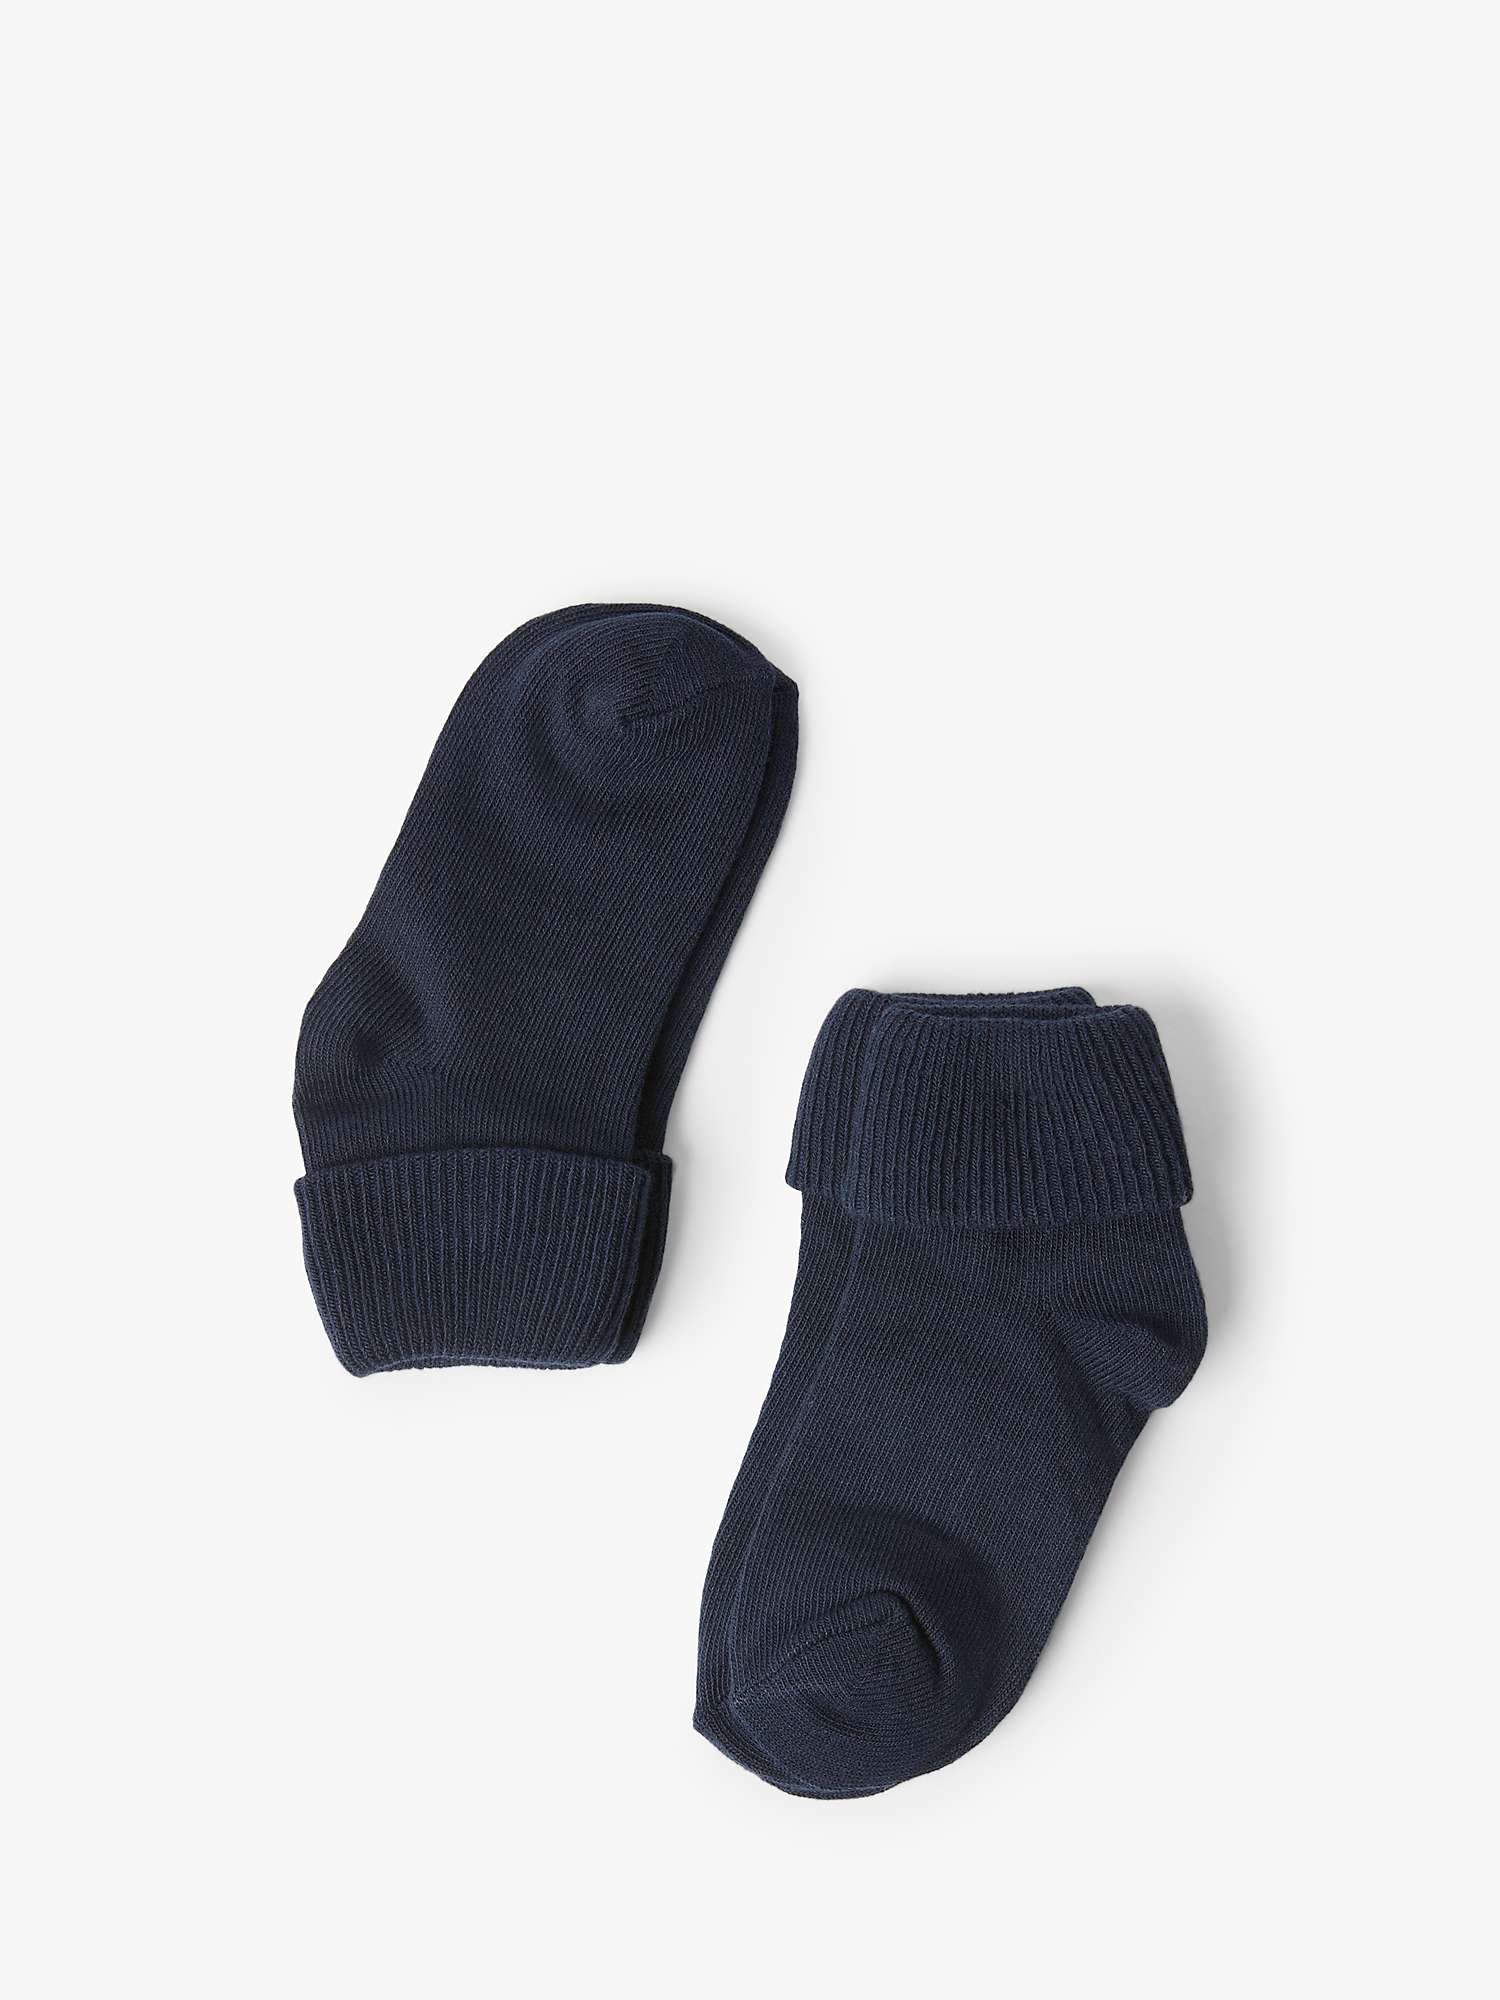 Buy Polarn O. Pyret Baby Socks, Pack of 2, Blue Online at johnlewis.com